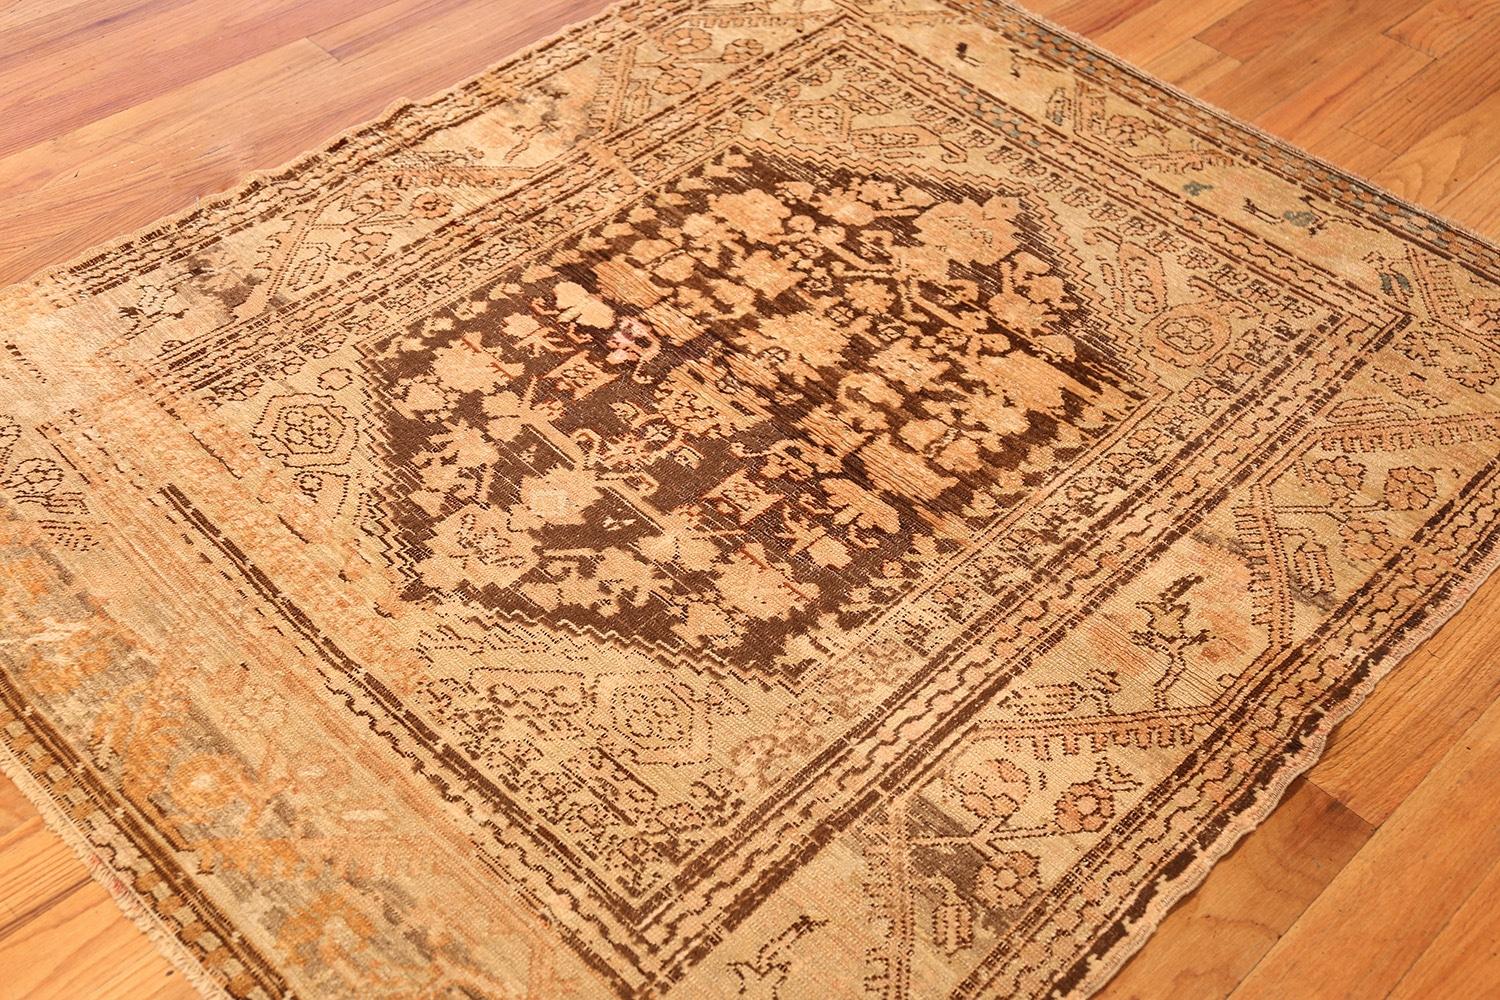 Antique Turkish Kula rug, Origin: Turkey, circa late 19th century. Size: 4 ft 5 in x 5 ft 6 in (1.35 m x 1.68 m)

